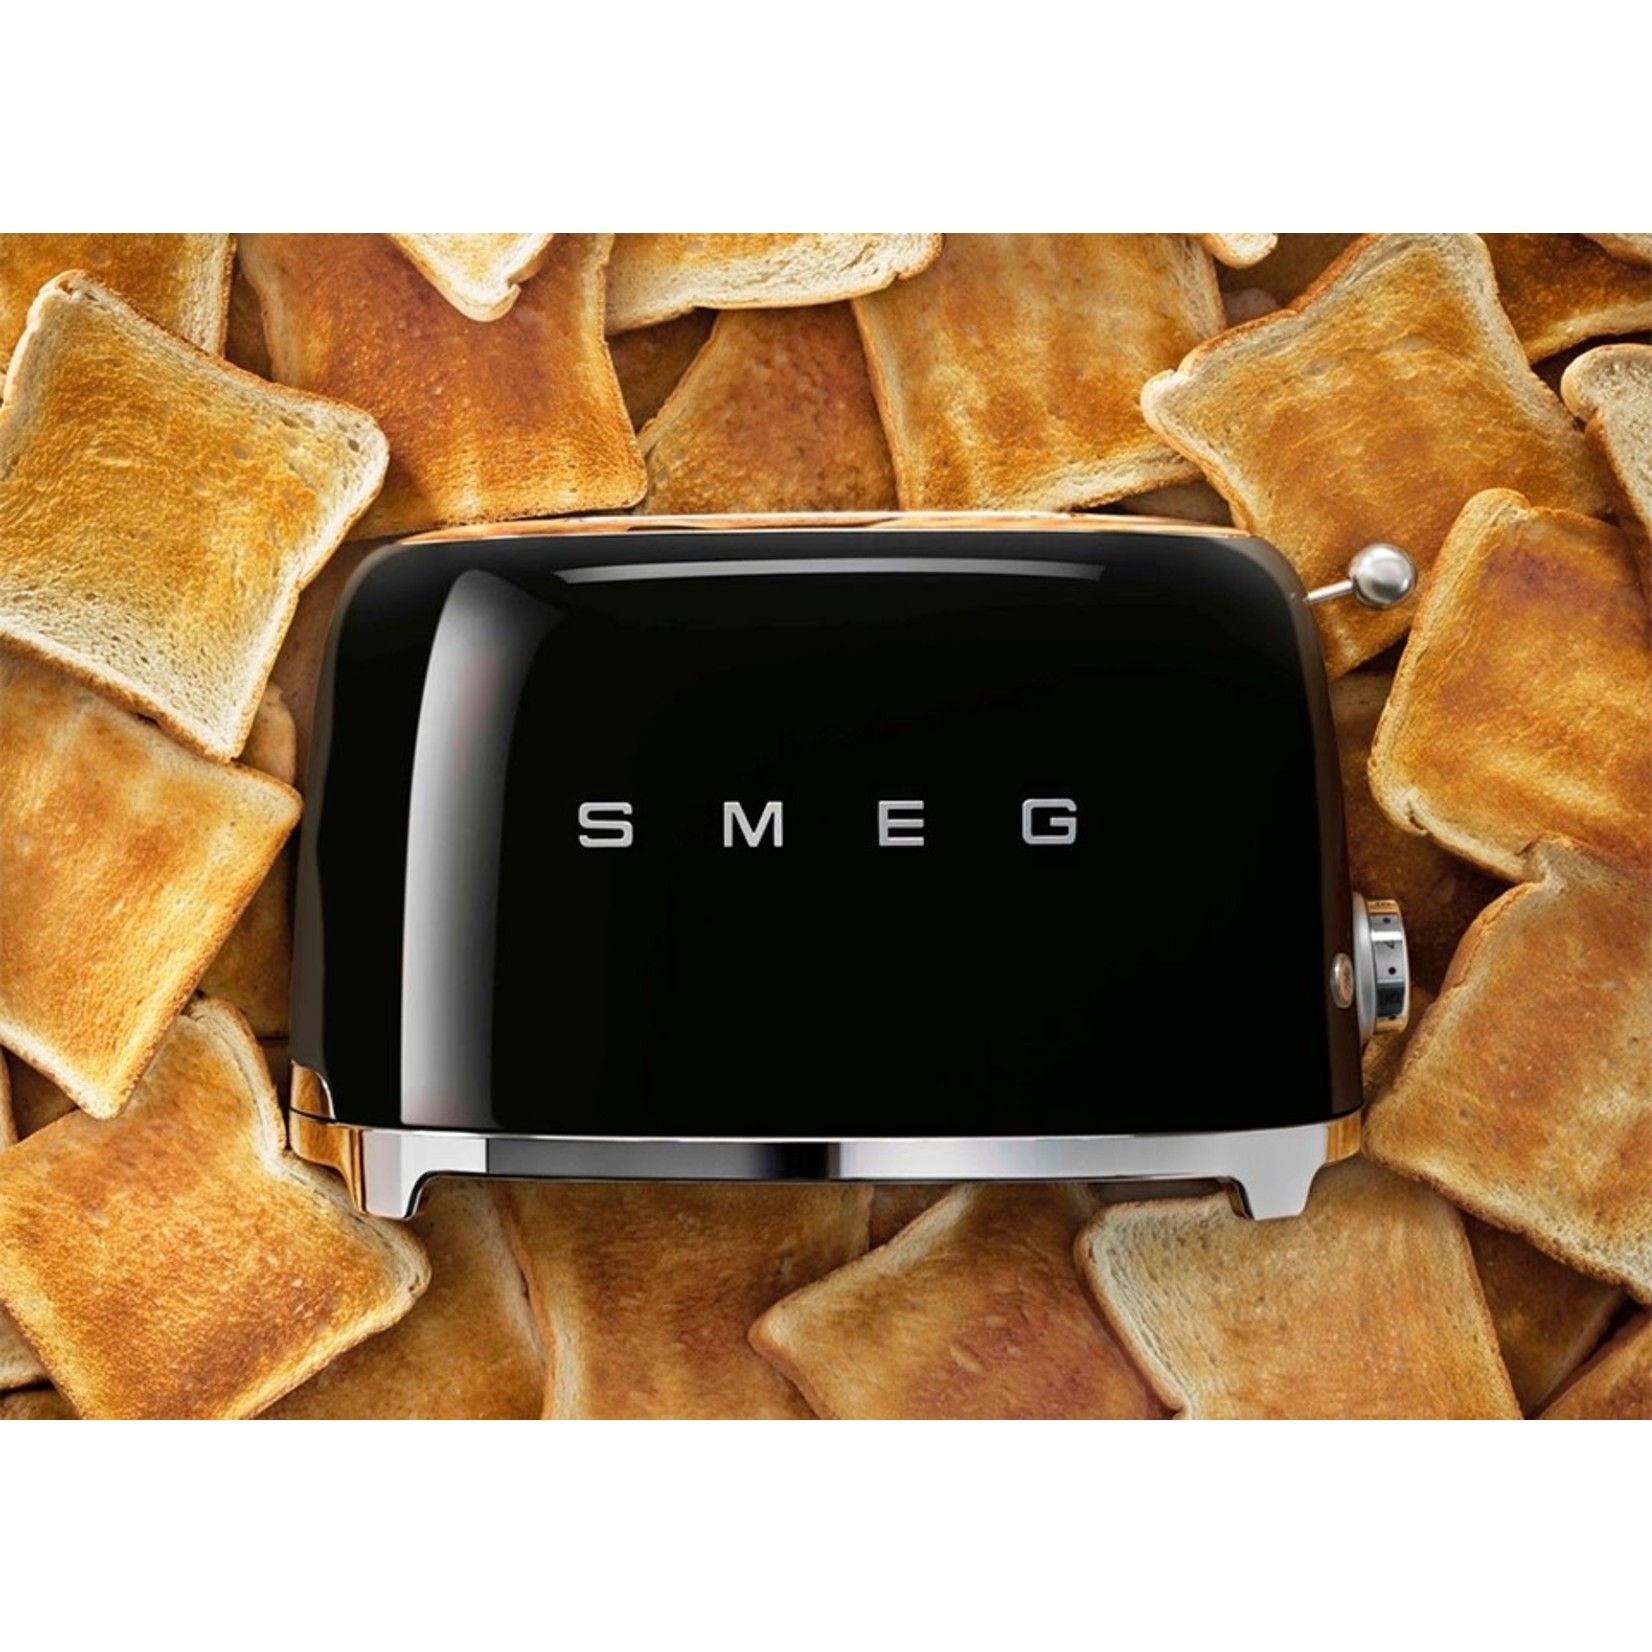 https://cdn.shoplightspeed.com/shops/659299/files/51568489/1652x1652x2/smeg-50s-retro-style-aesthetic-2-slice-toasters.jpg